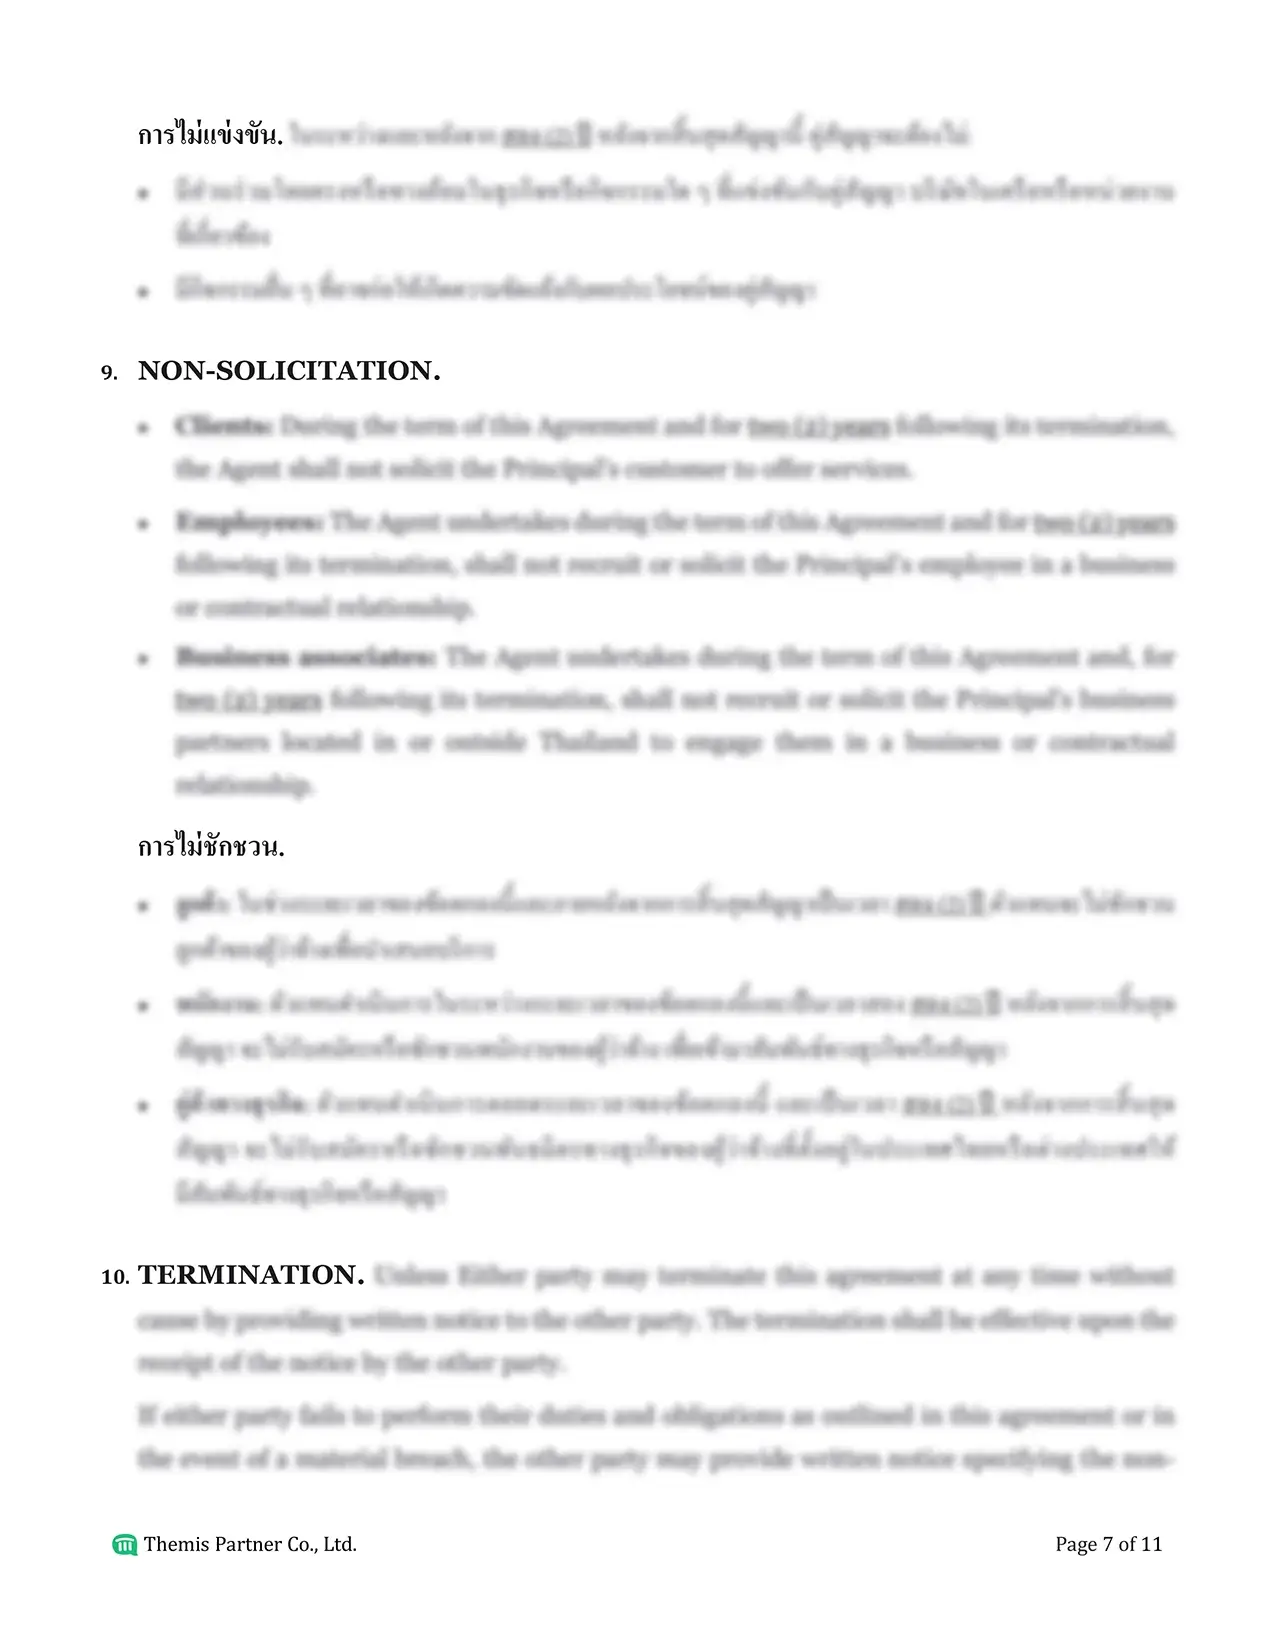 Agency agreement Thailand 7